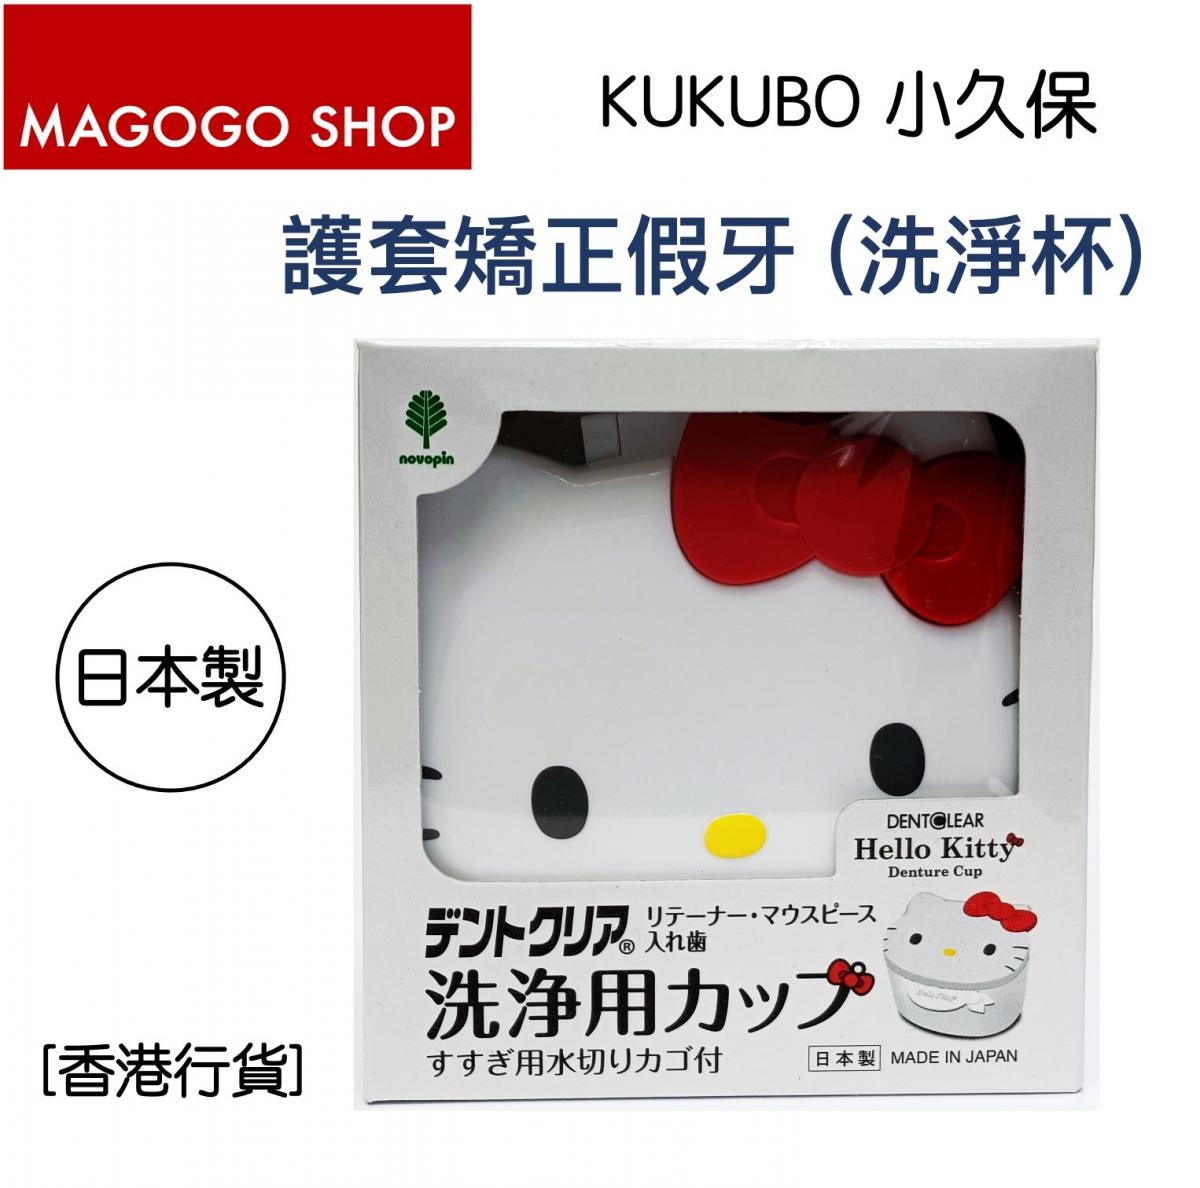 Boxer Brief Hello Kitty Face S Size HKAP937